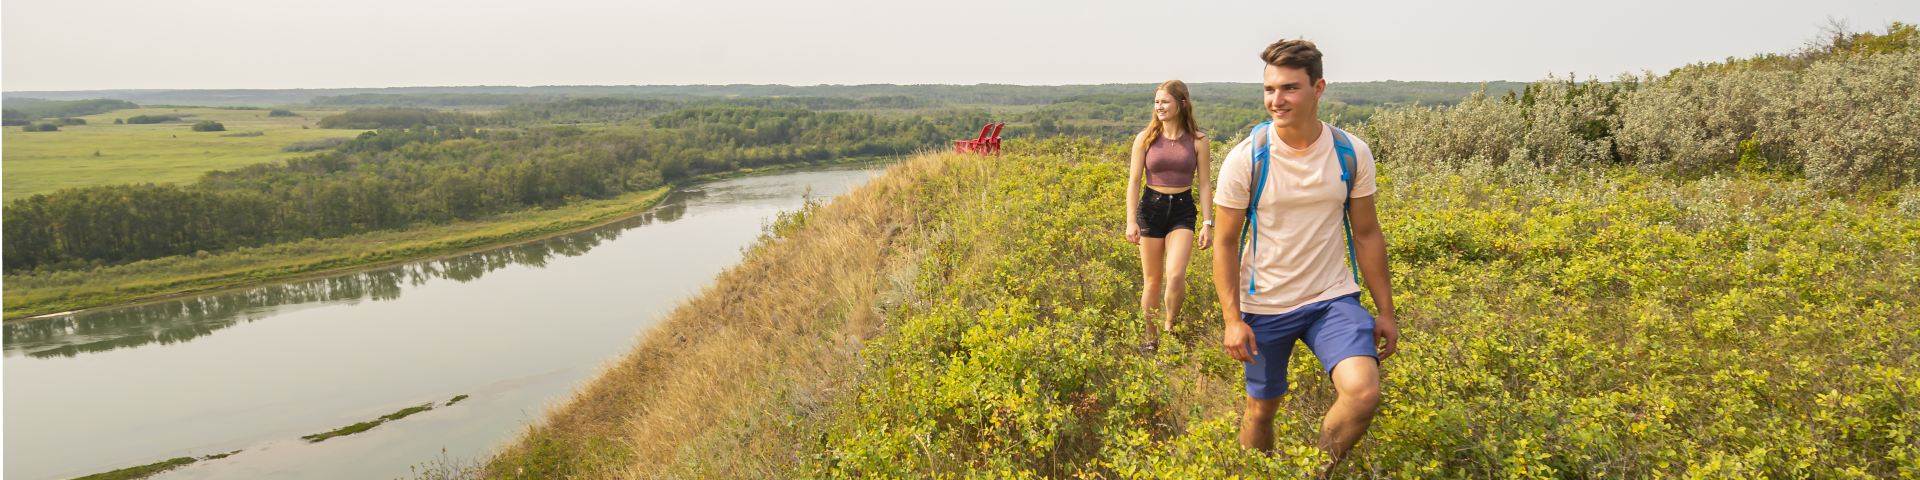 Two visitors walking on Li pchi shmayn trail overlooking the South Saskatchewan River.